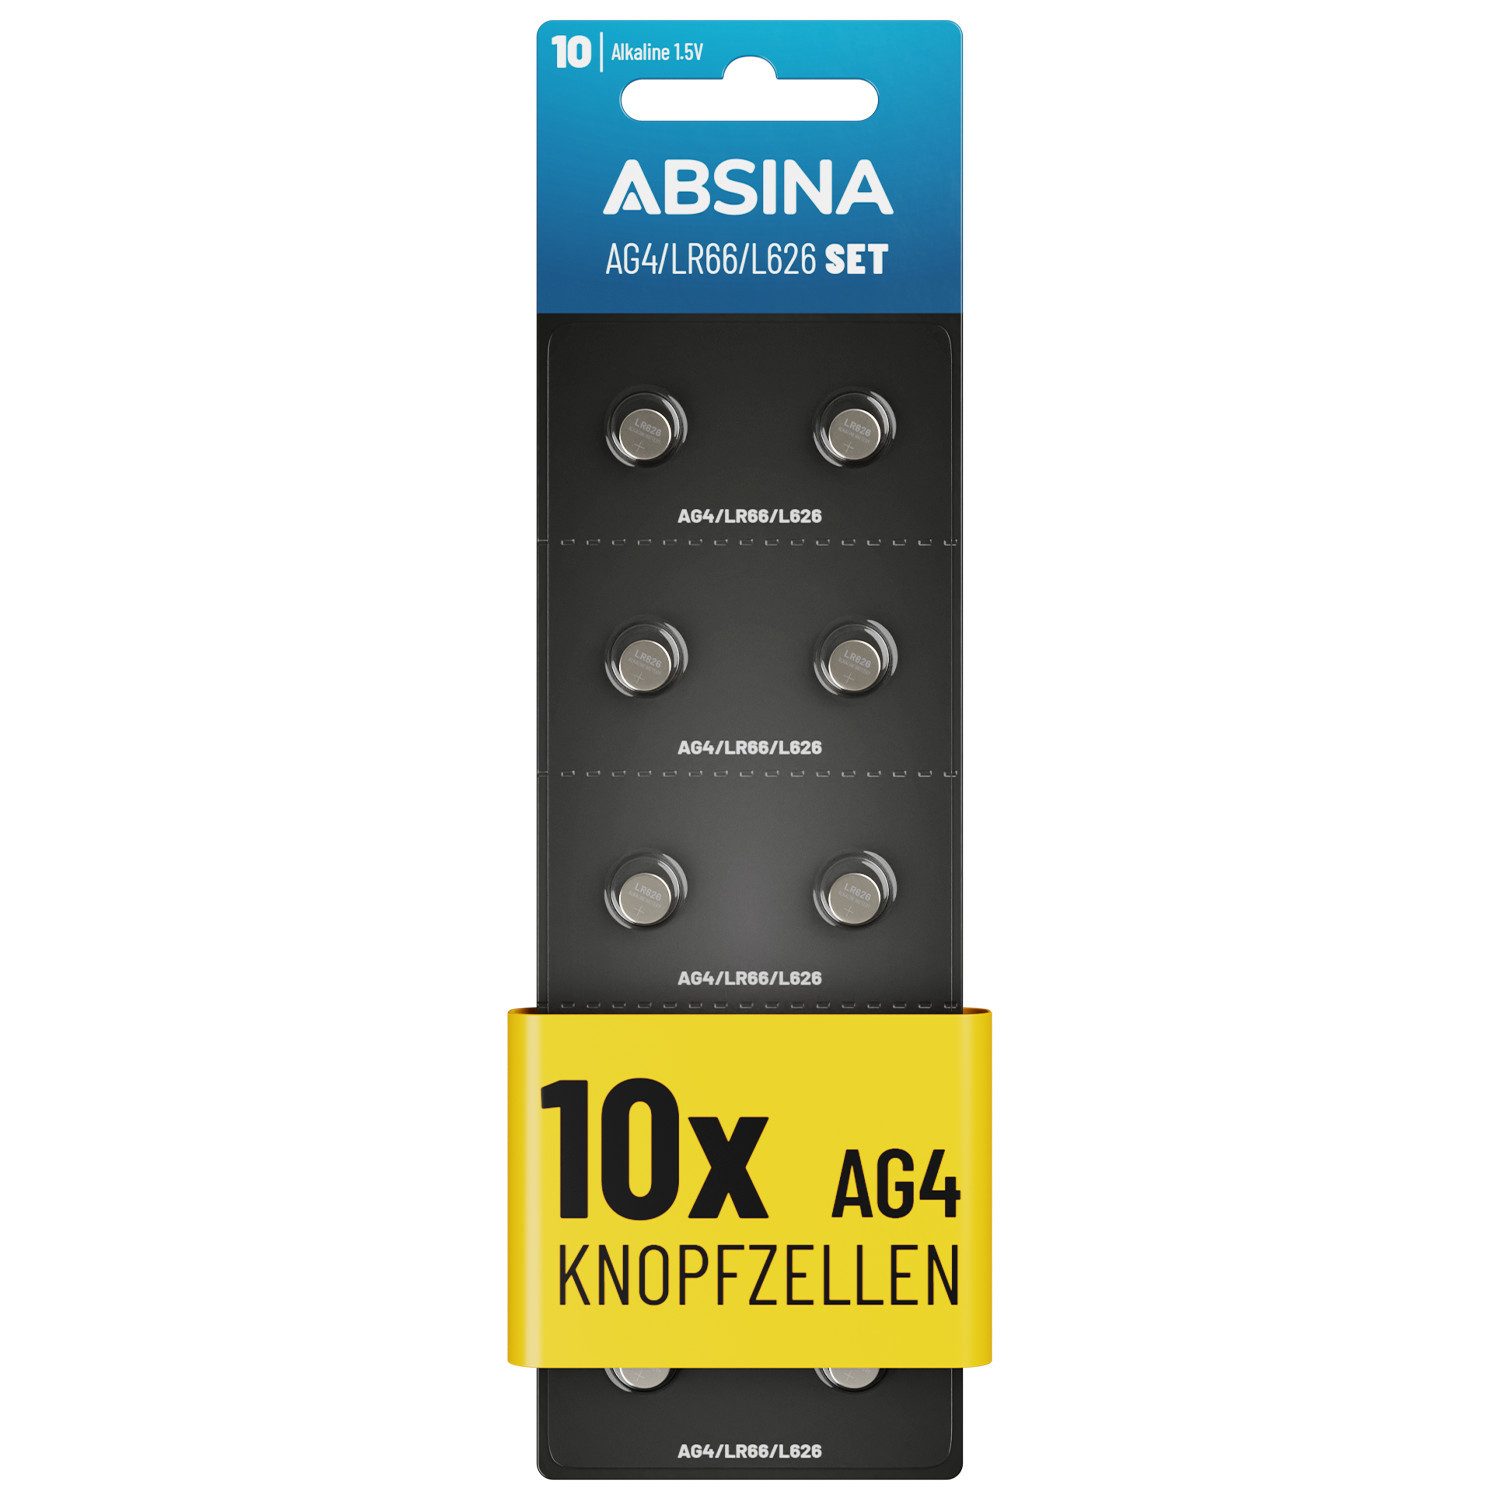 ABSINA AG4 LR66 Knopfzelle 10er Pack - 1,5V Alkaline Knopfzellen Knopfzelle, (1 St)